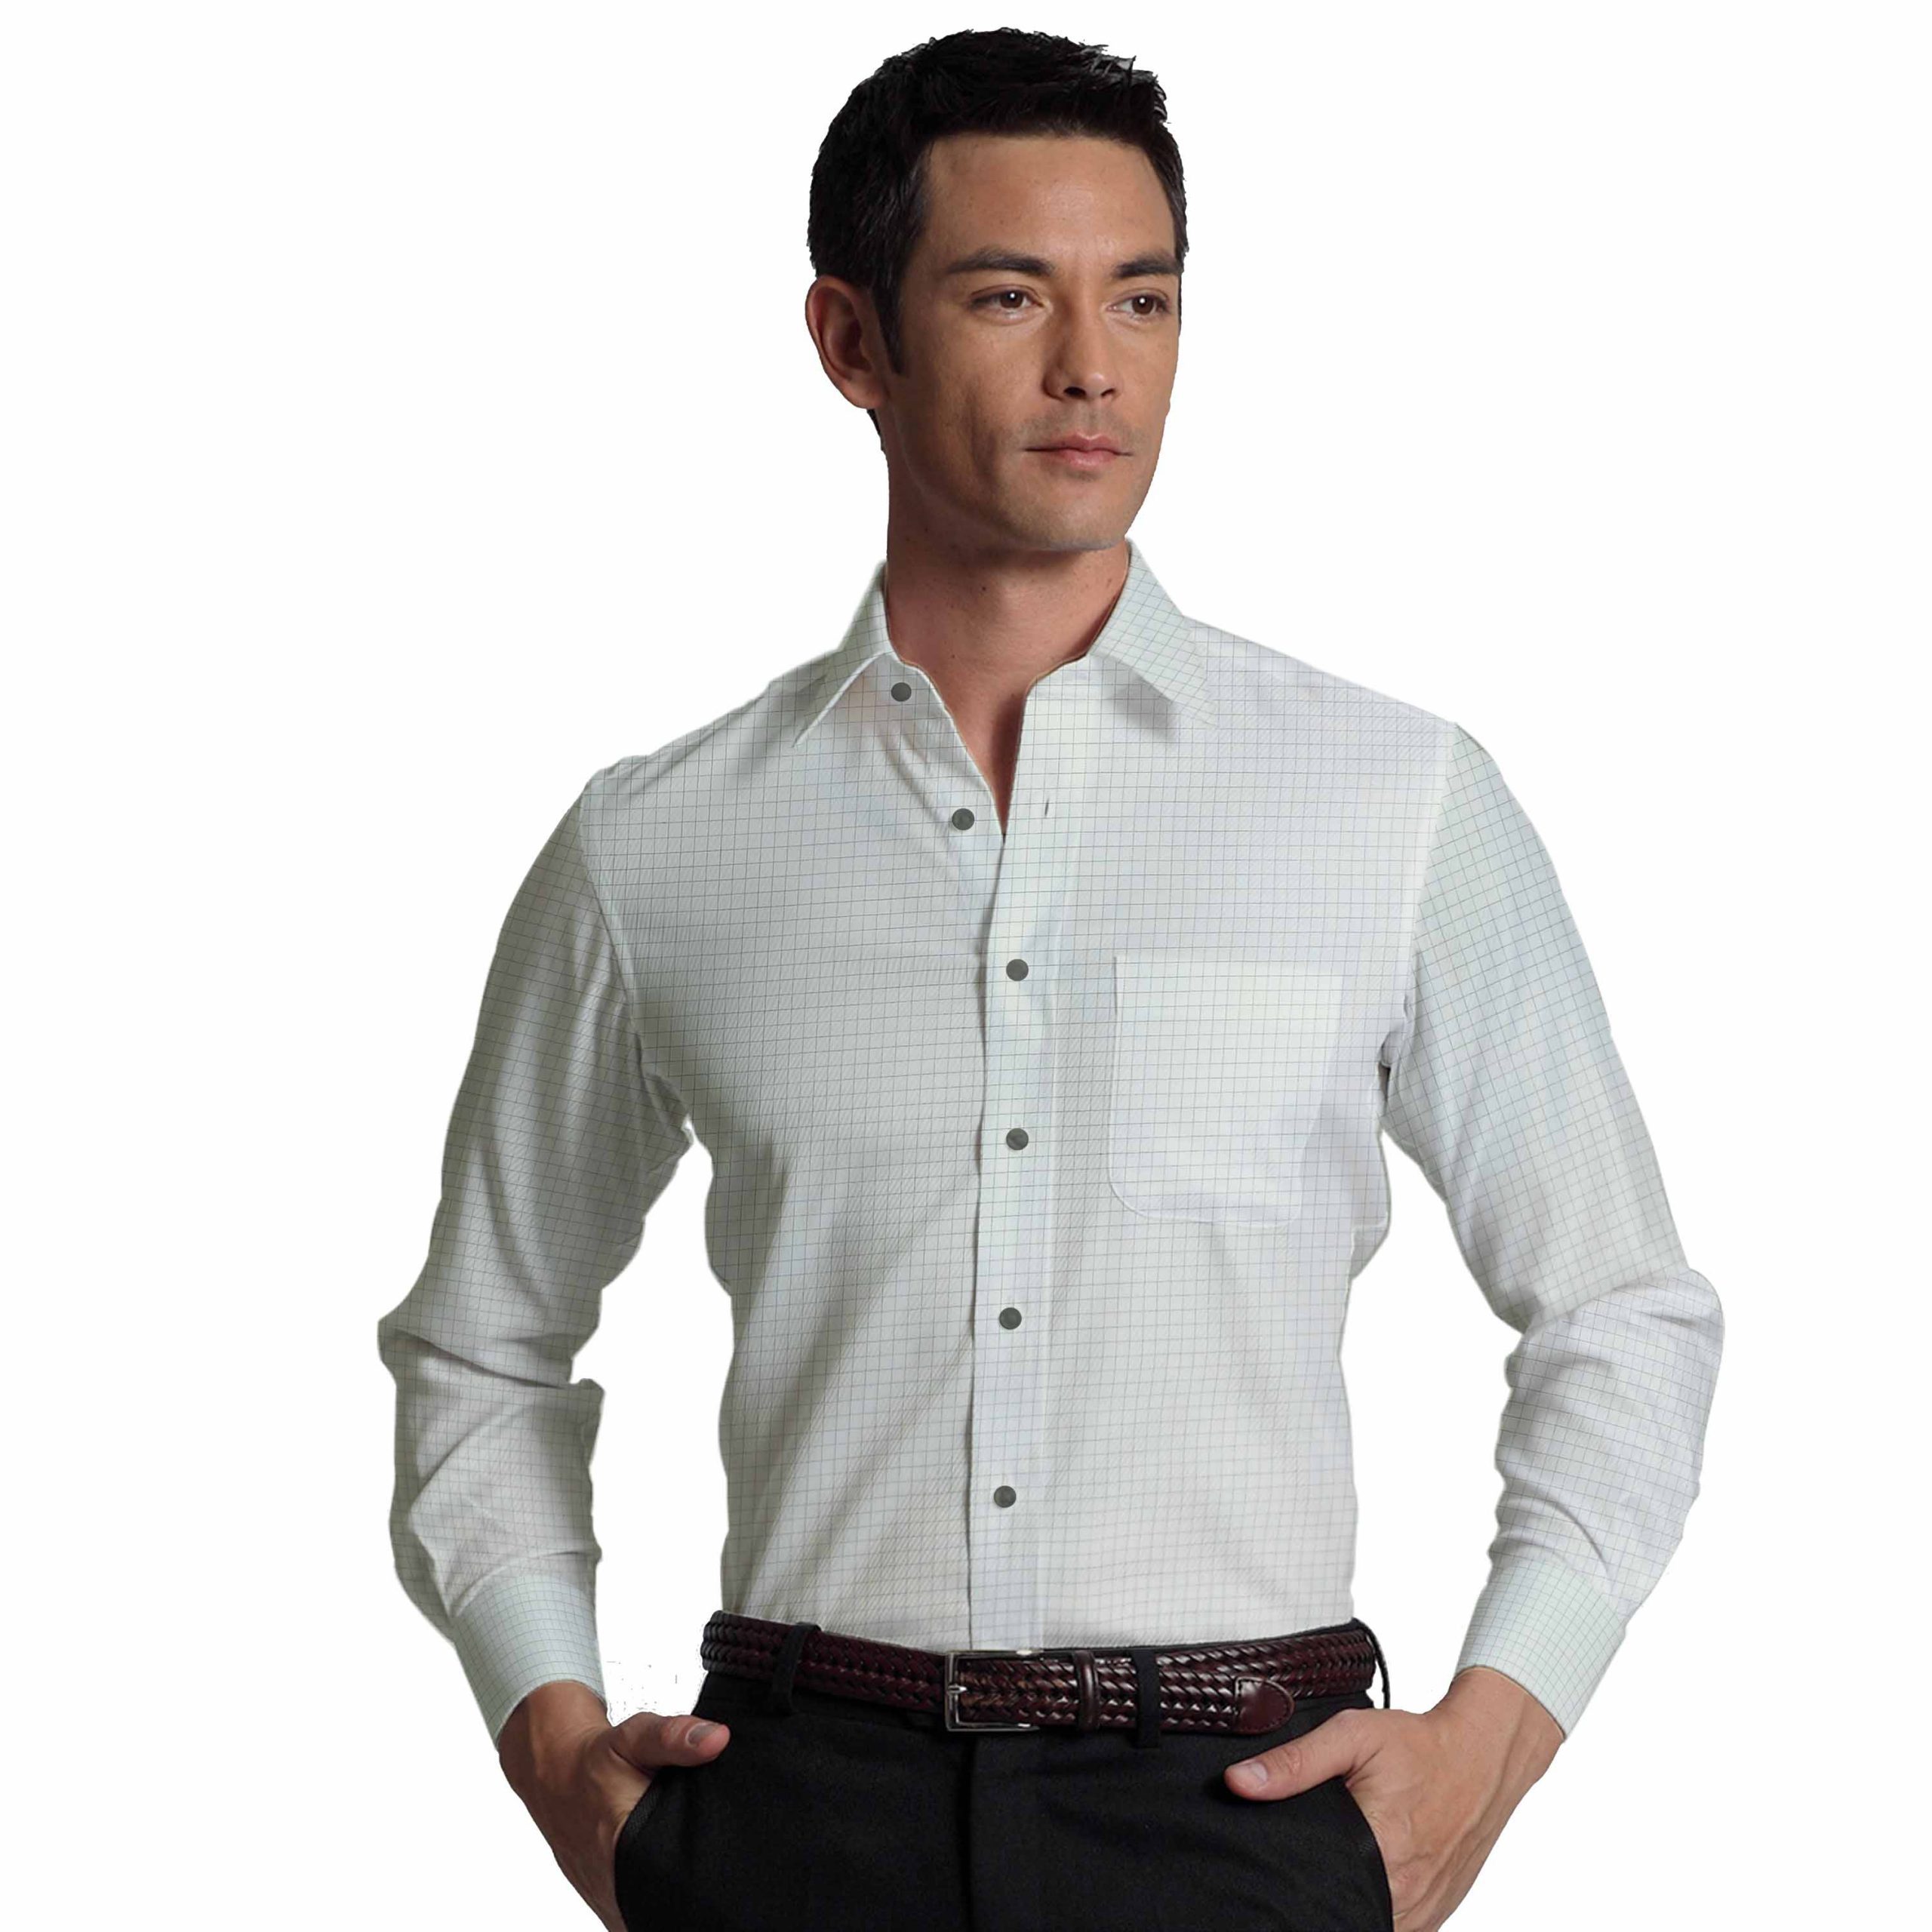 Soktas Men's White & Grey Check 70's Supima Cotton Shirt Fabric